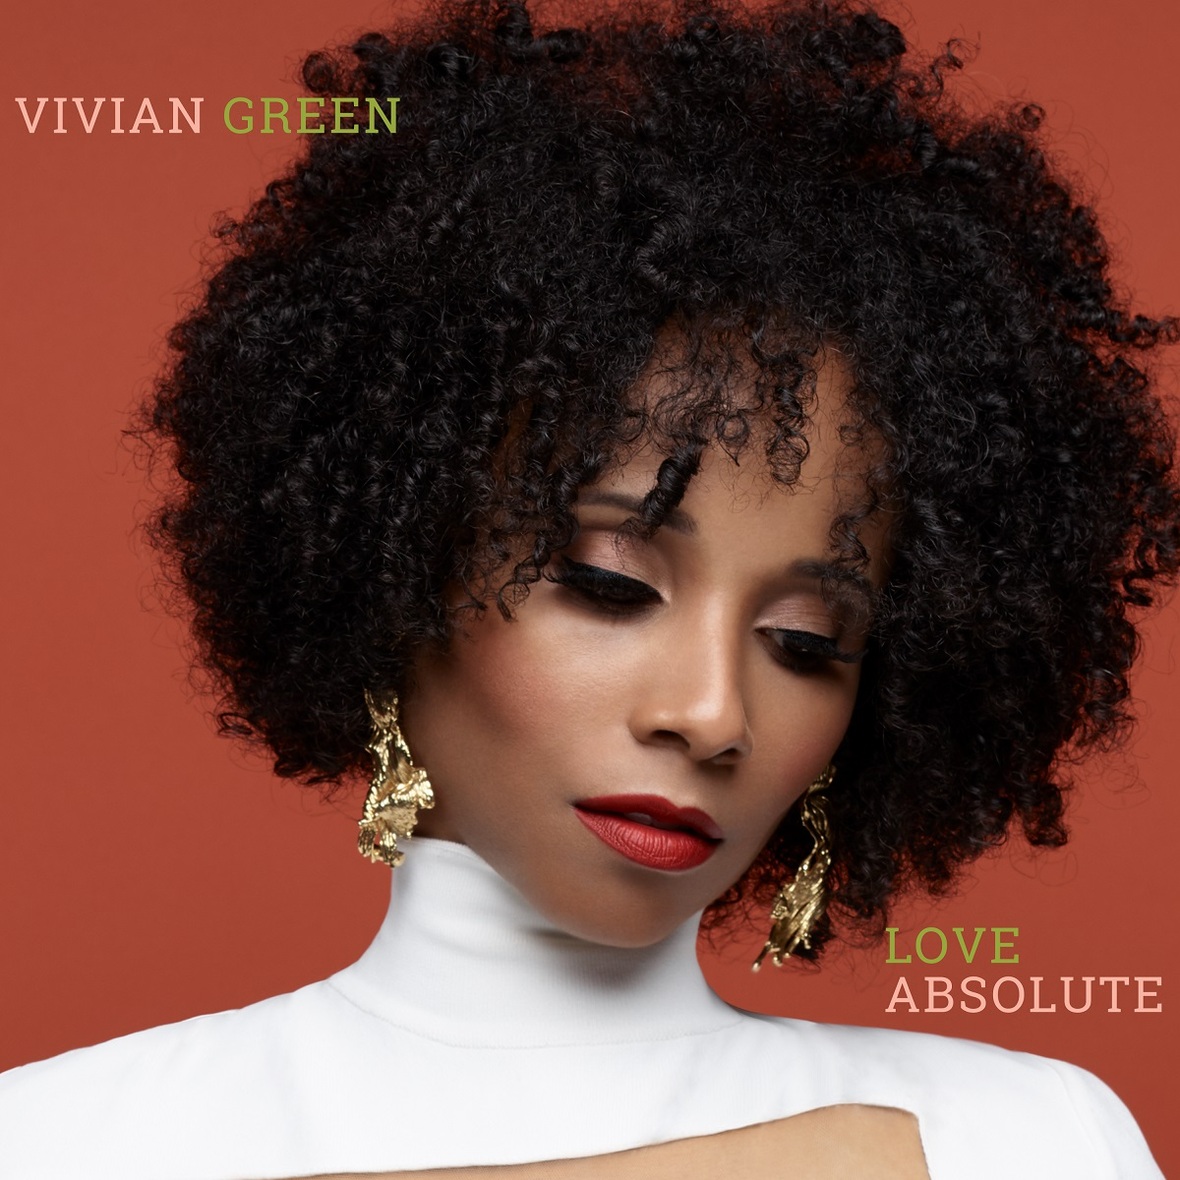 Vivian Green Releases New Album “Love Absolute”